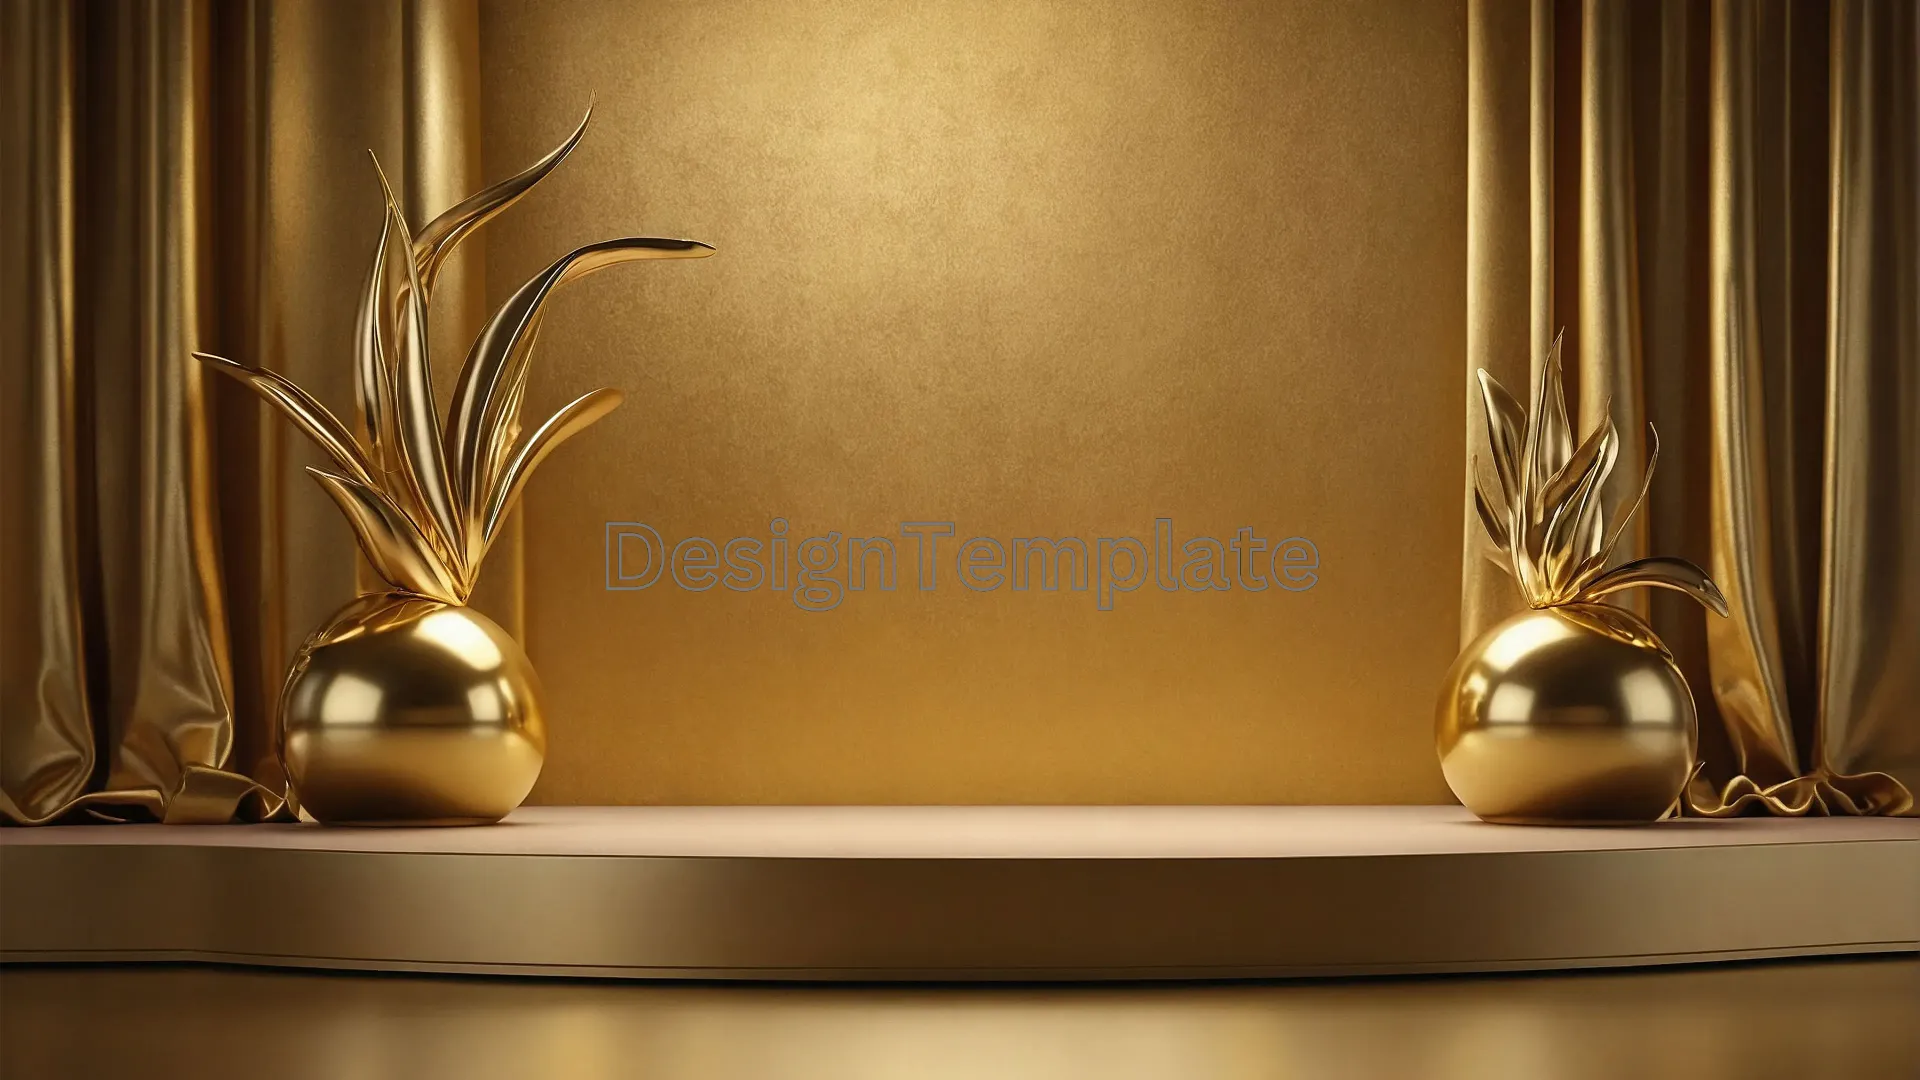 Award Show Podium with Golden Curtains Photo image